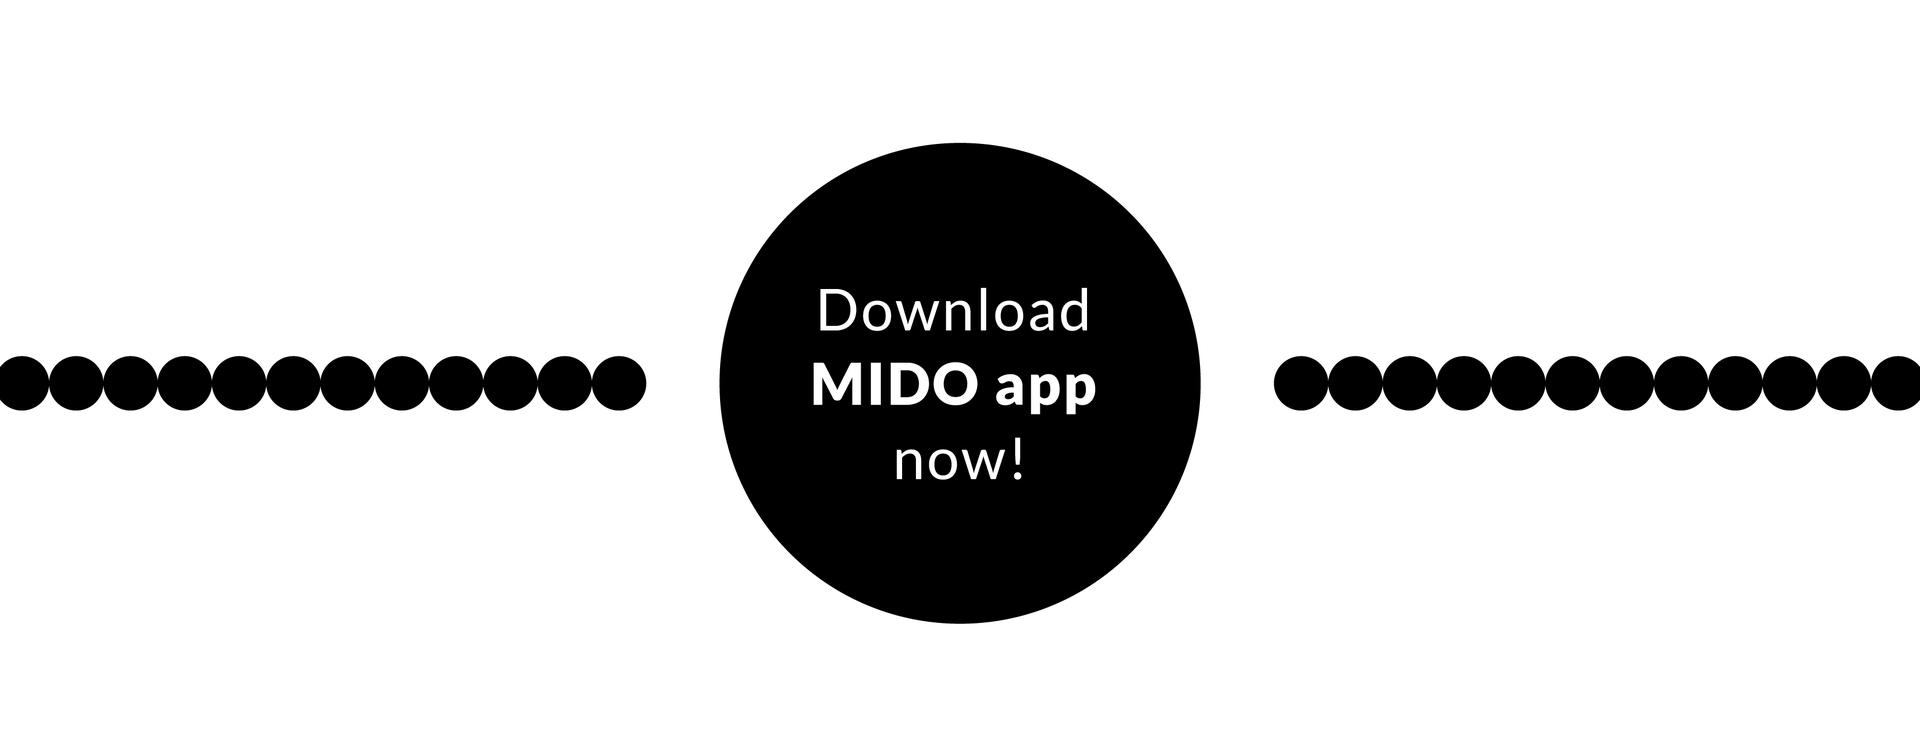 Download MIDO app now!